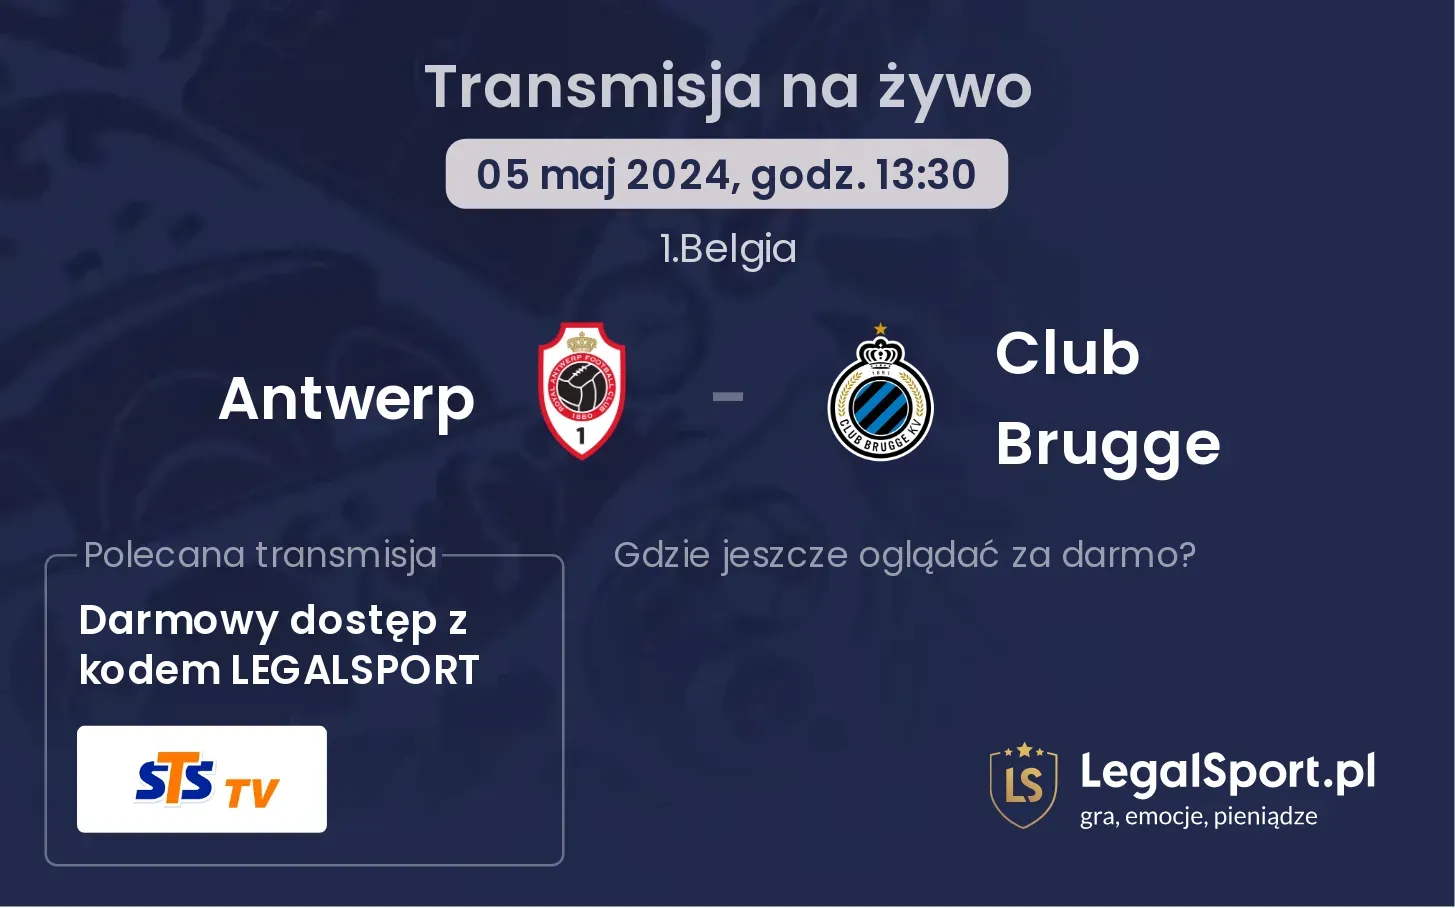 Antwerp - Club Brugge transmisja na żywo